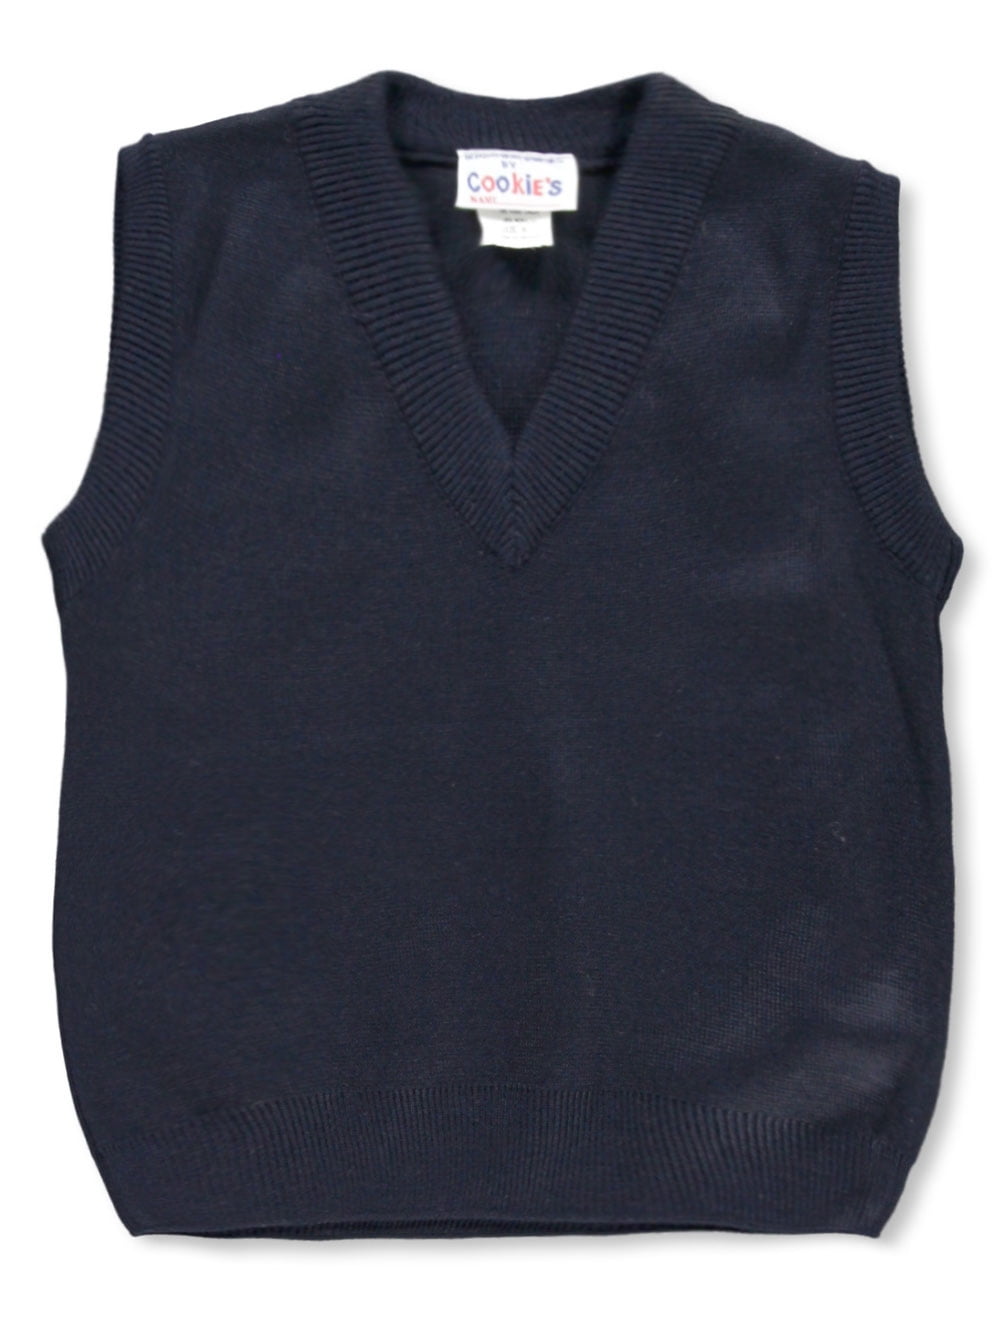 navy Cookies Brand Big Boys V-Neck Sweater Vest 14 